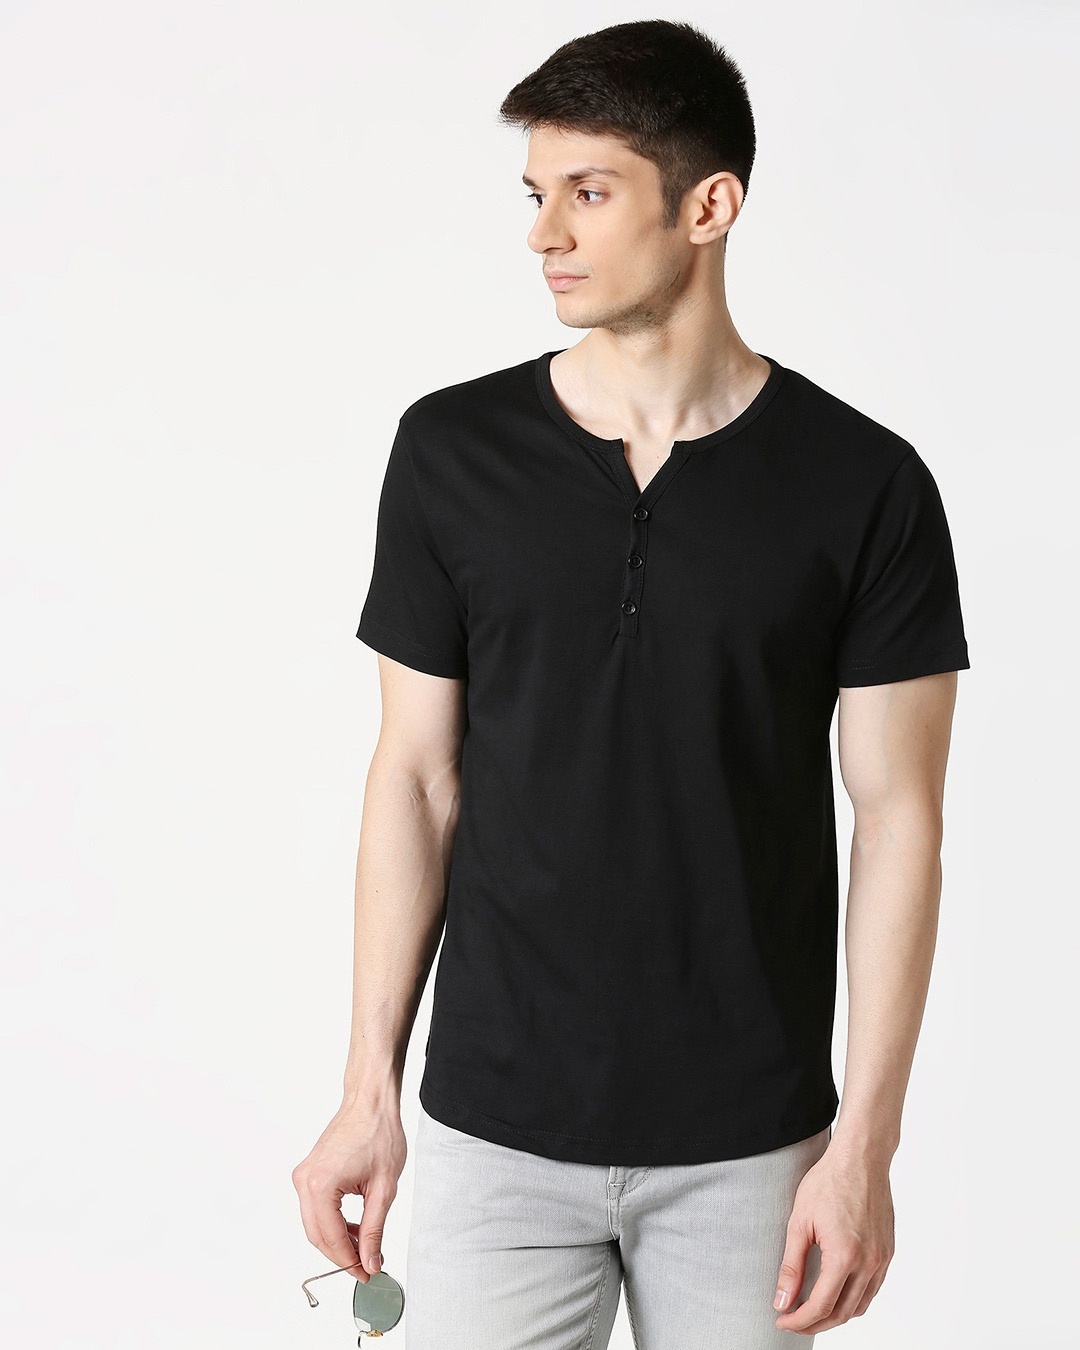 Buy Black V-Neck Henley T-Shirt Online at Bewakoof